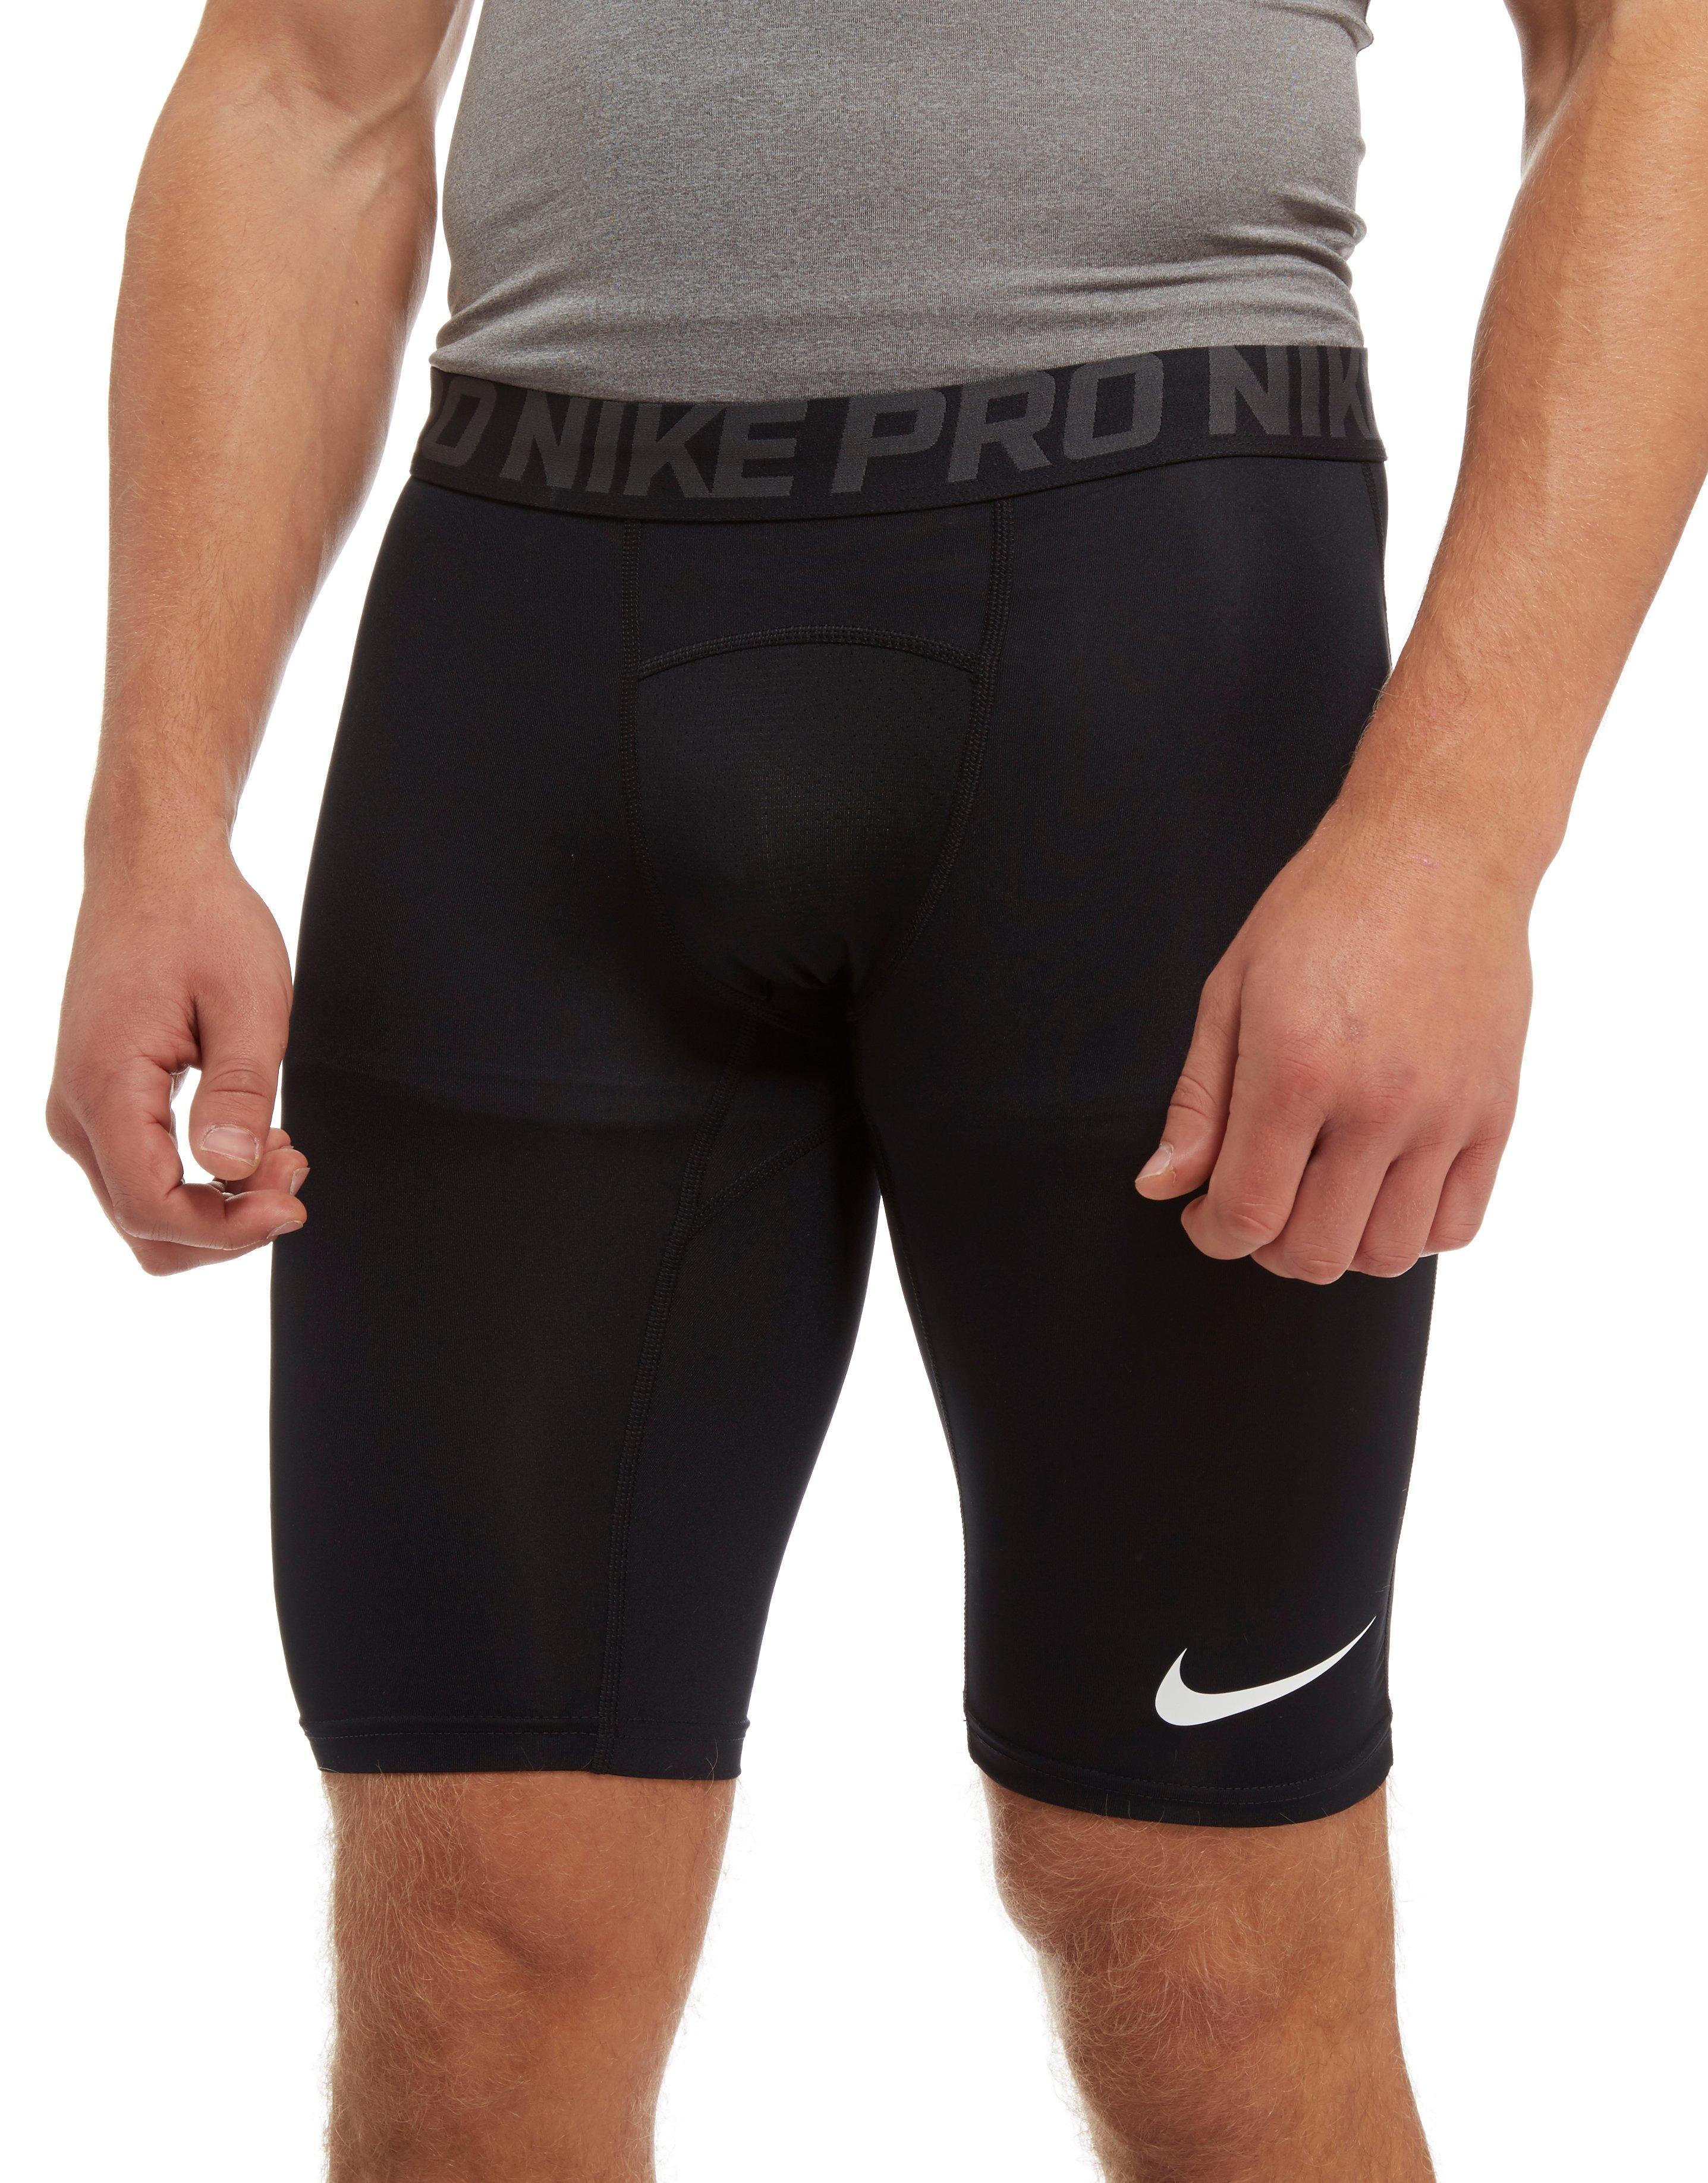 nike 9 compression shorts